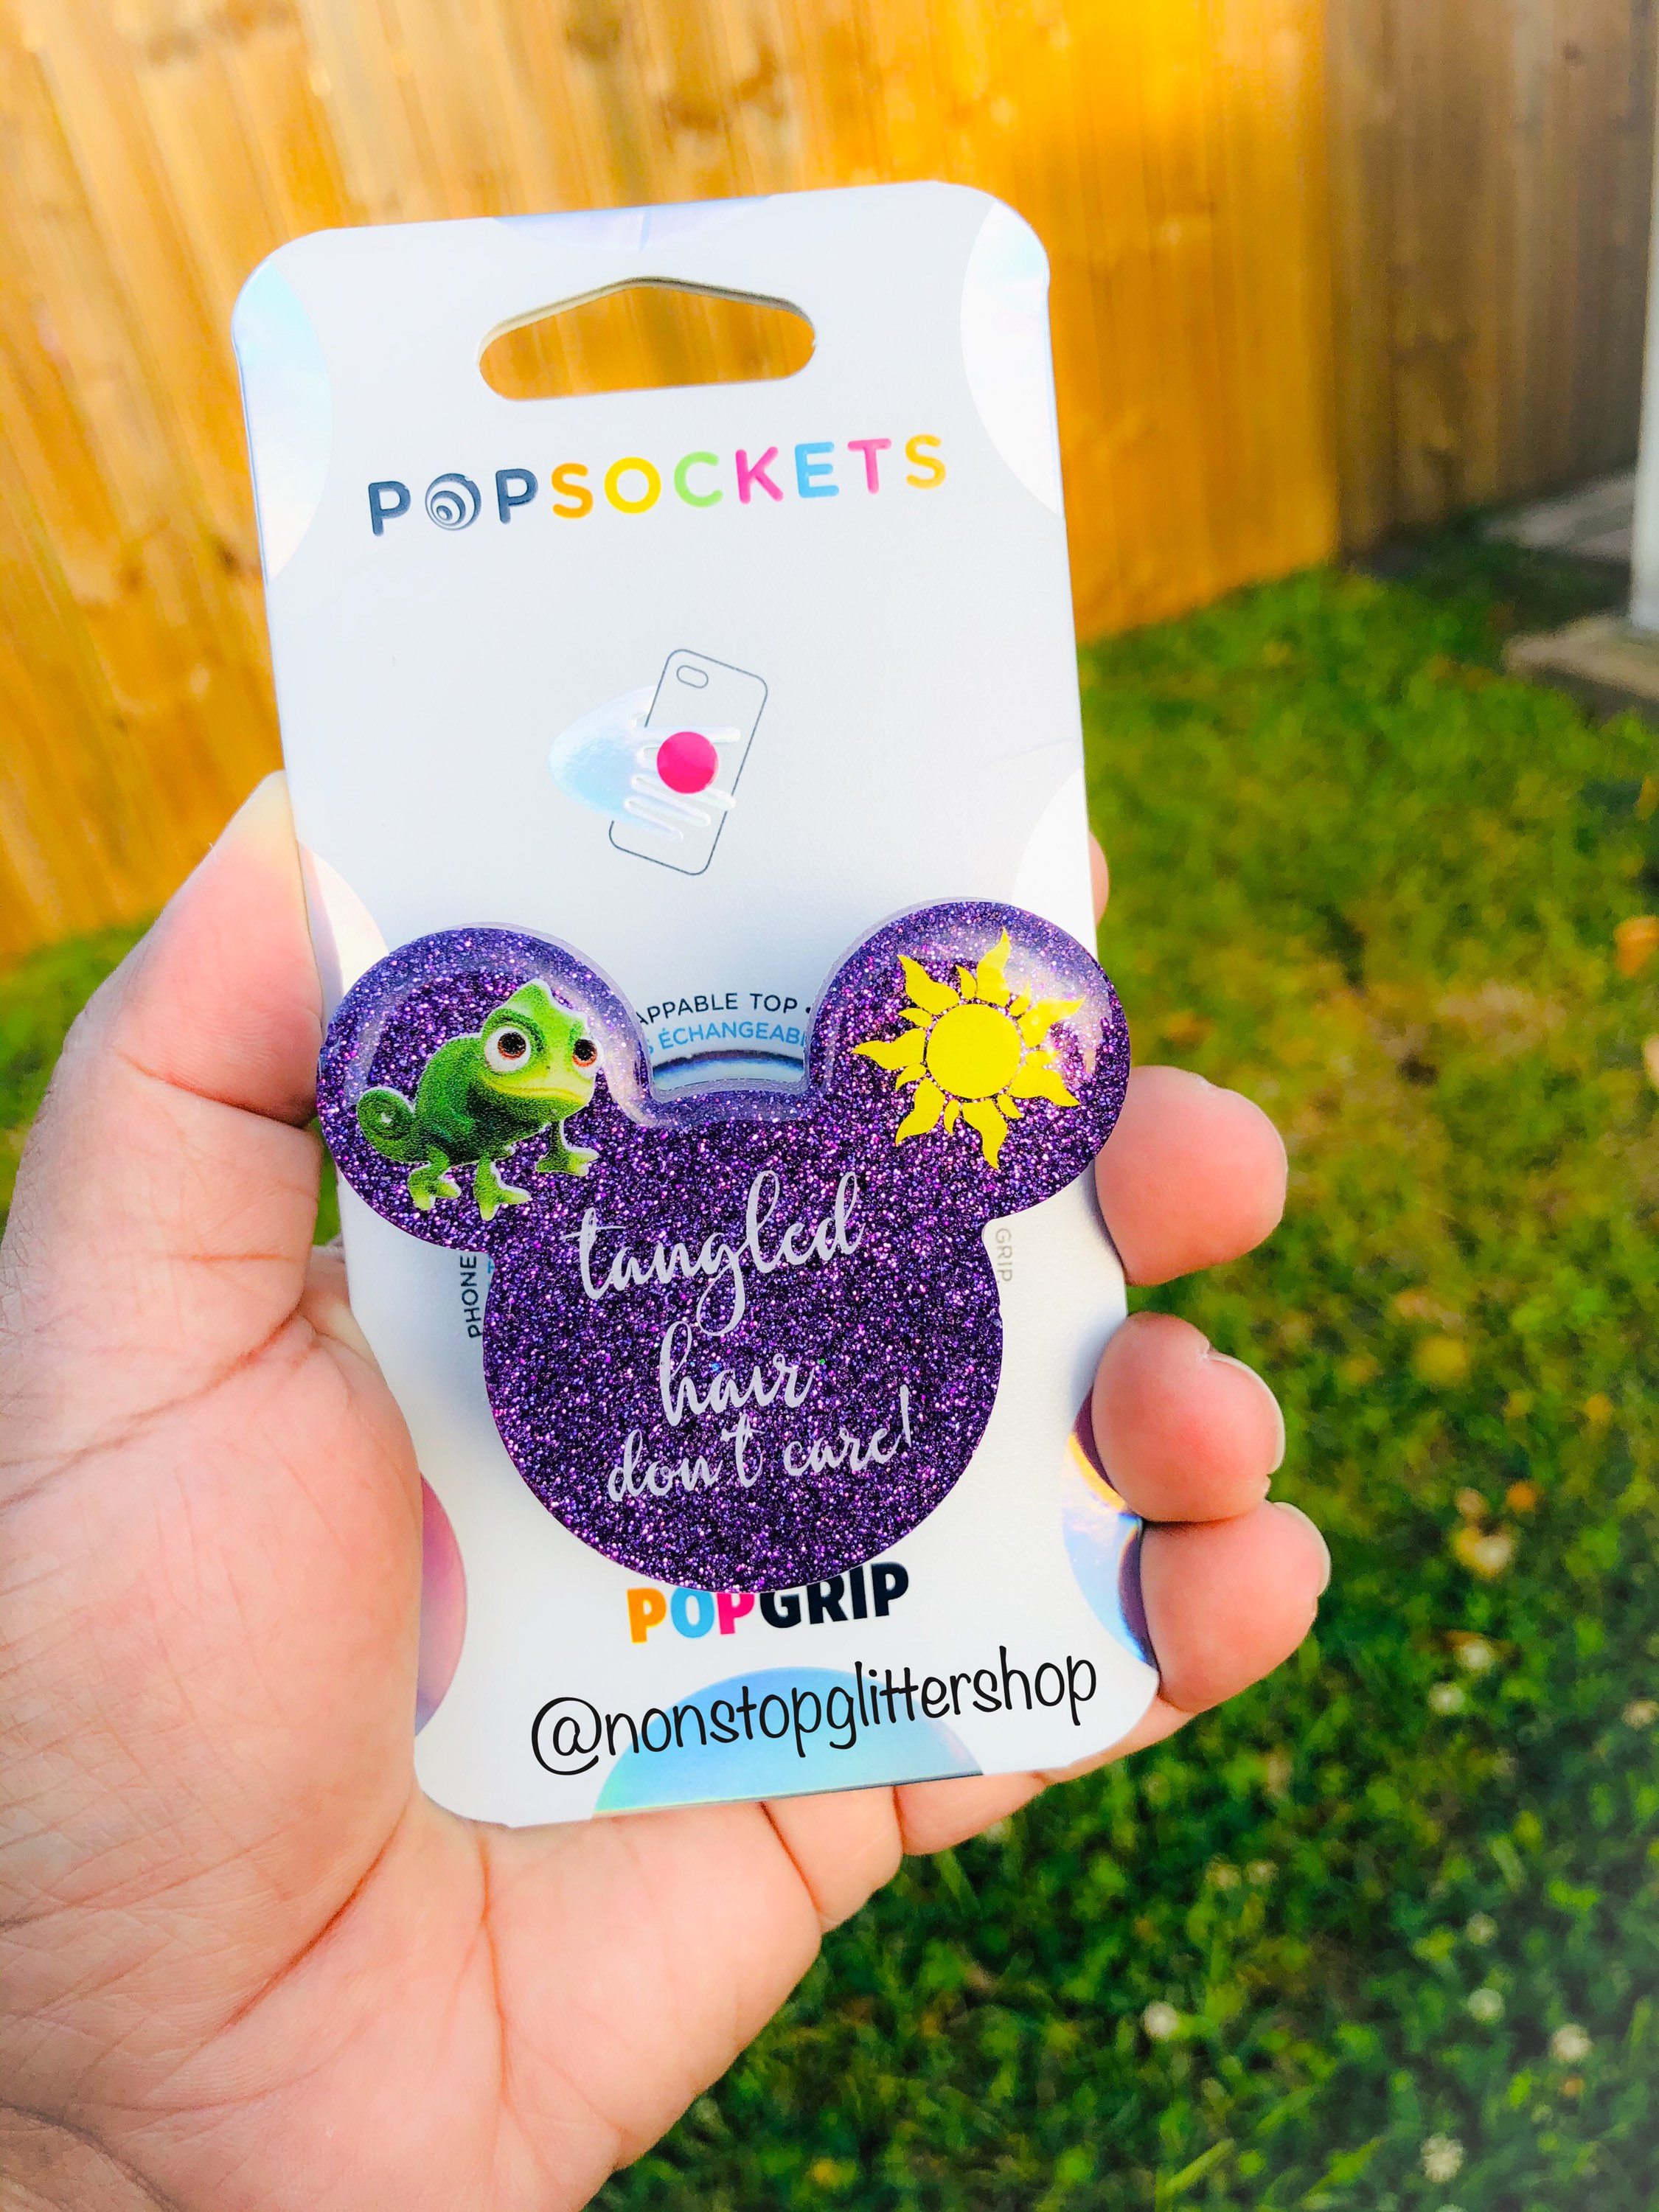 Sprinkles Minnie Inspired Popsocket | Disney Popsocket | Mickey Popsocket |  pop socket | phone grip | Disney world | Disneyland